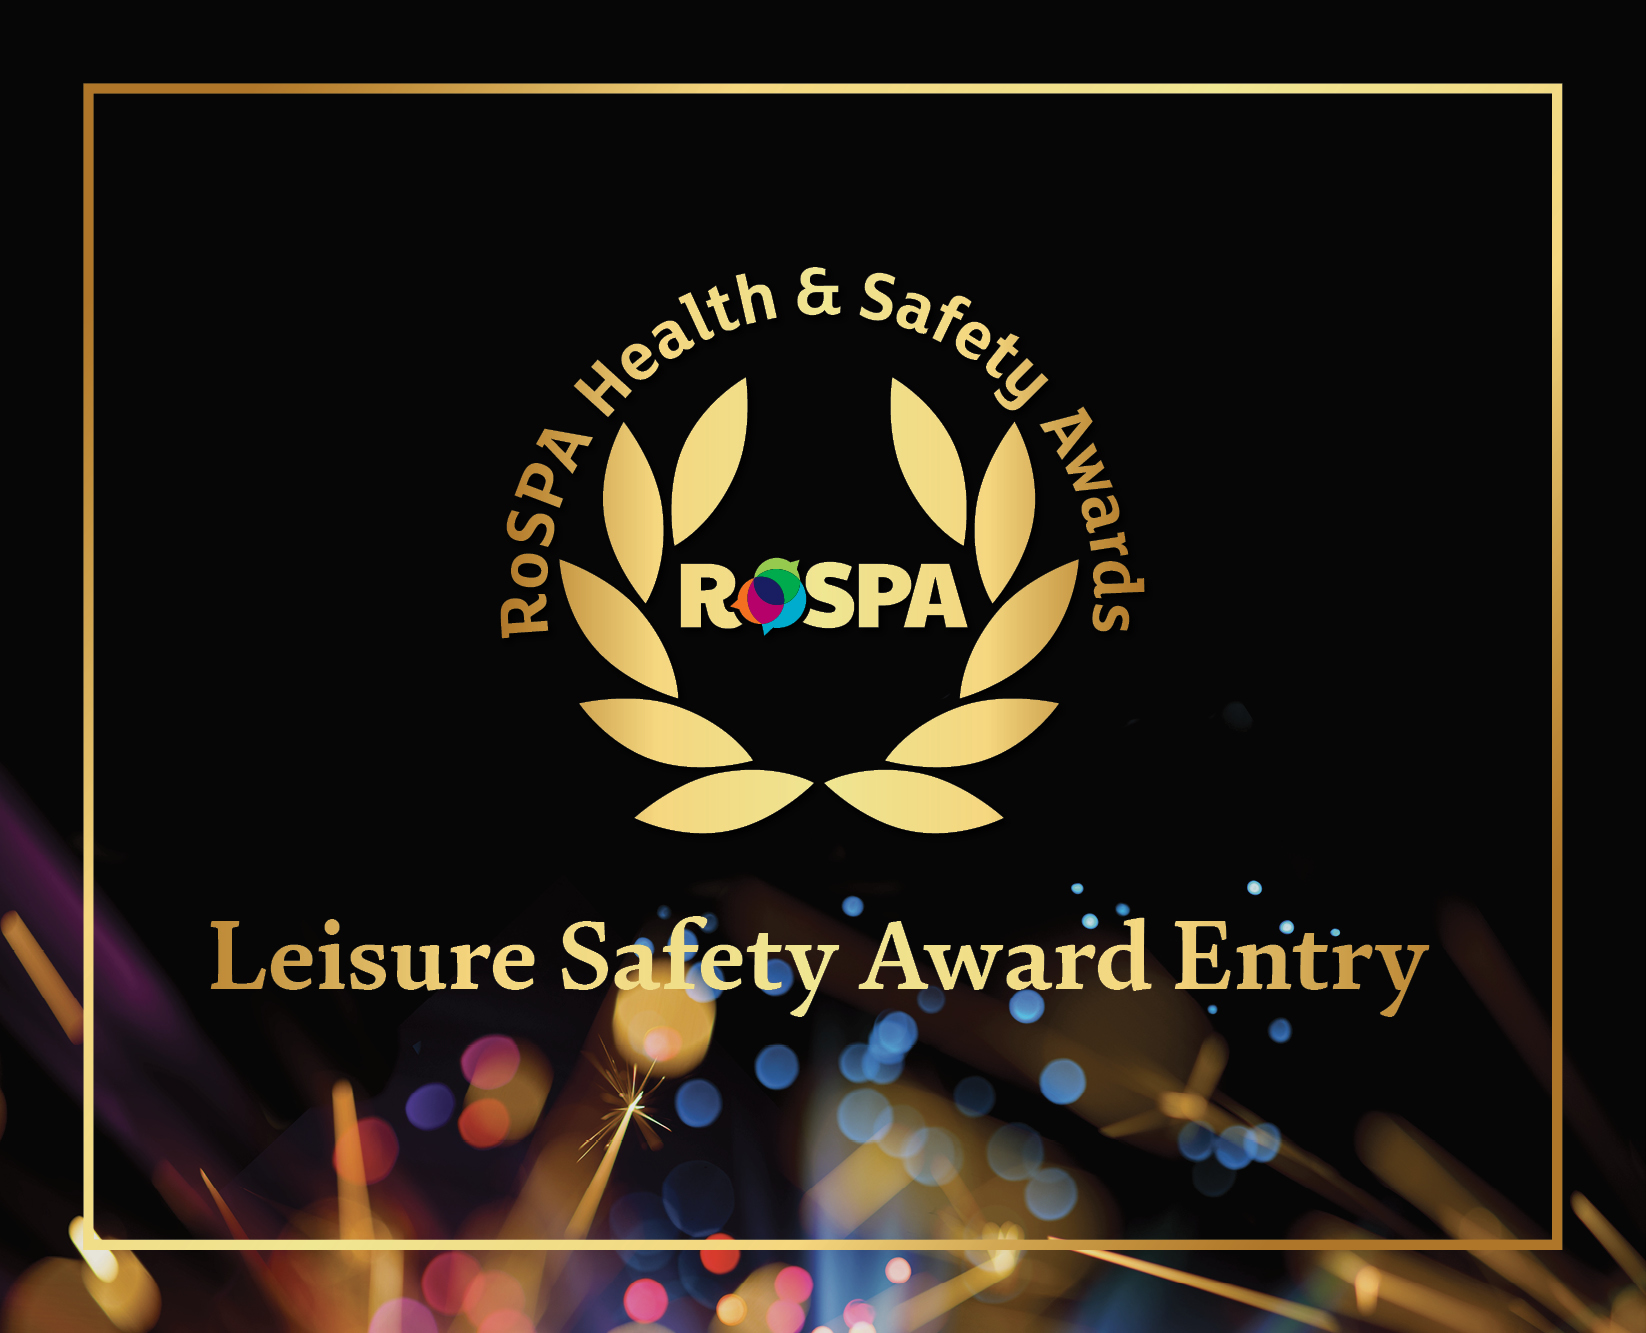 Award Entry - Leisure Sector